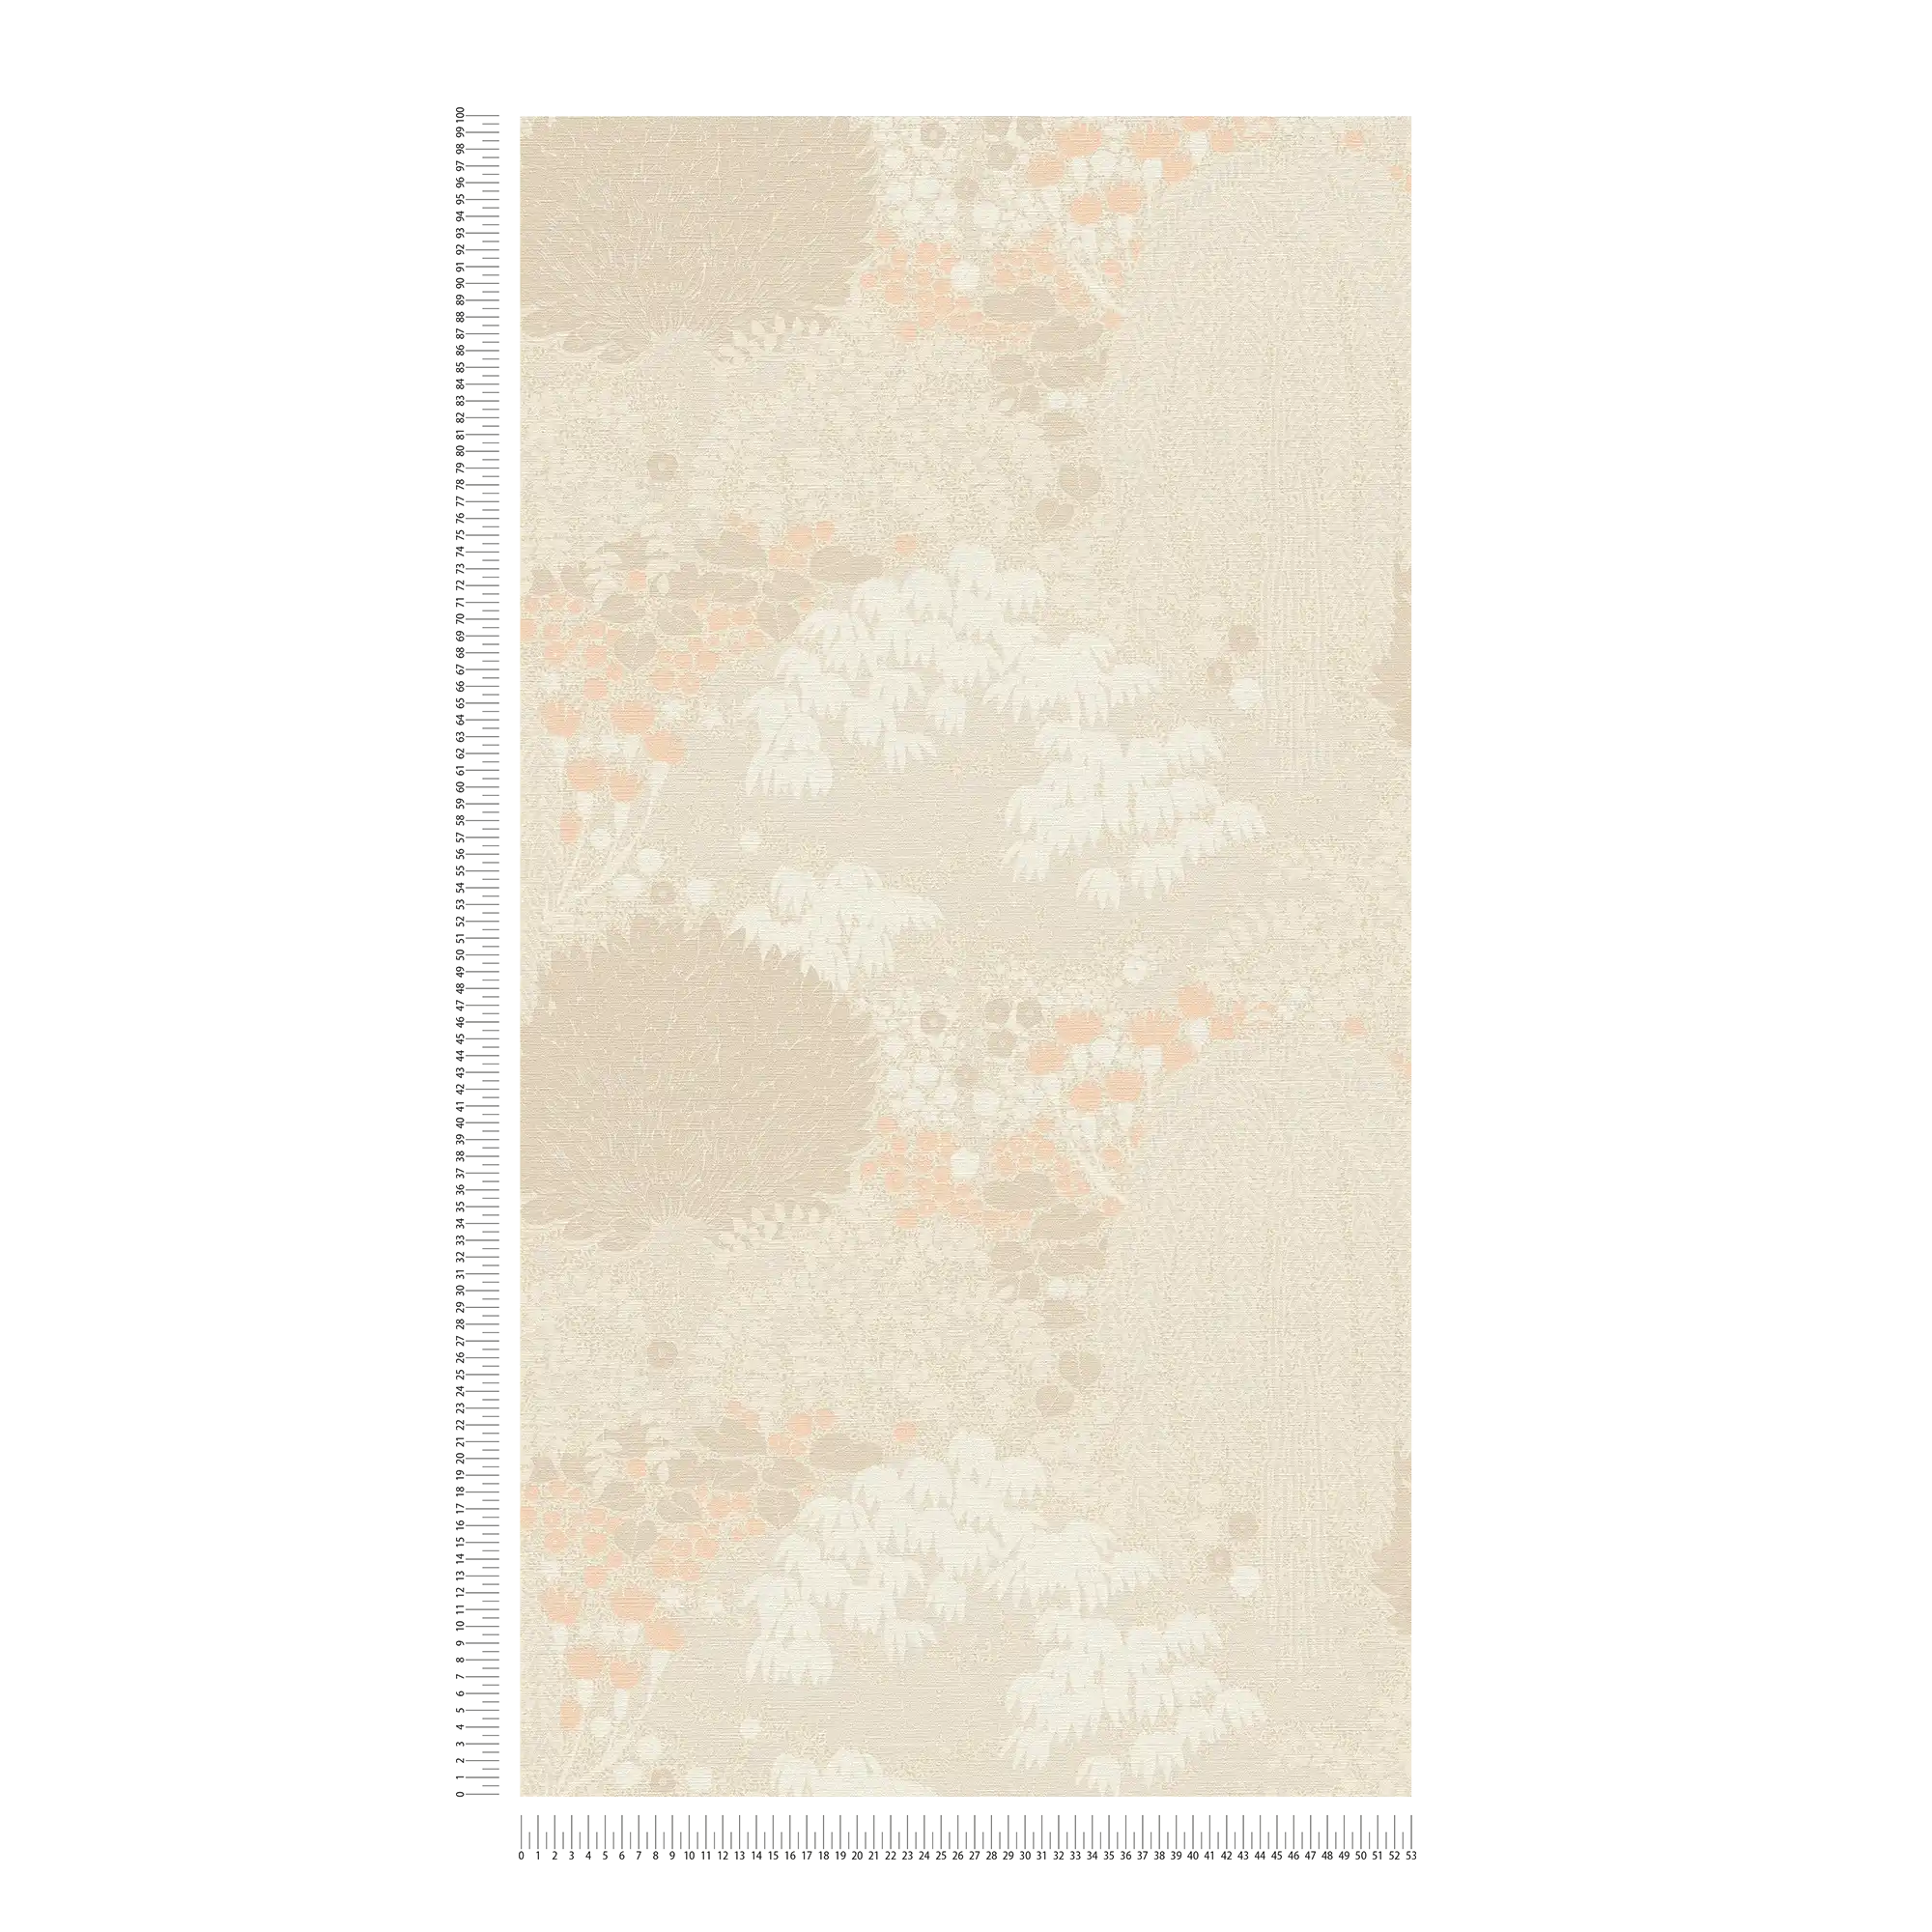             wallpaper floral with leaves light textured, matt - beige, cream, pink
        